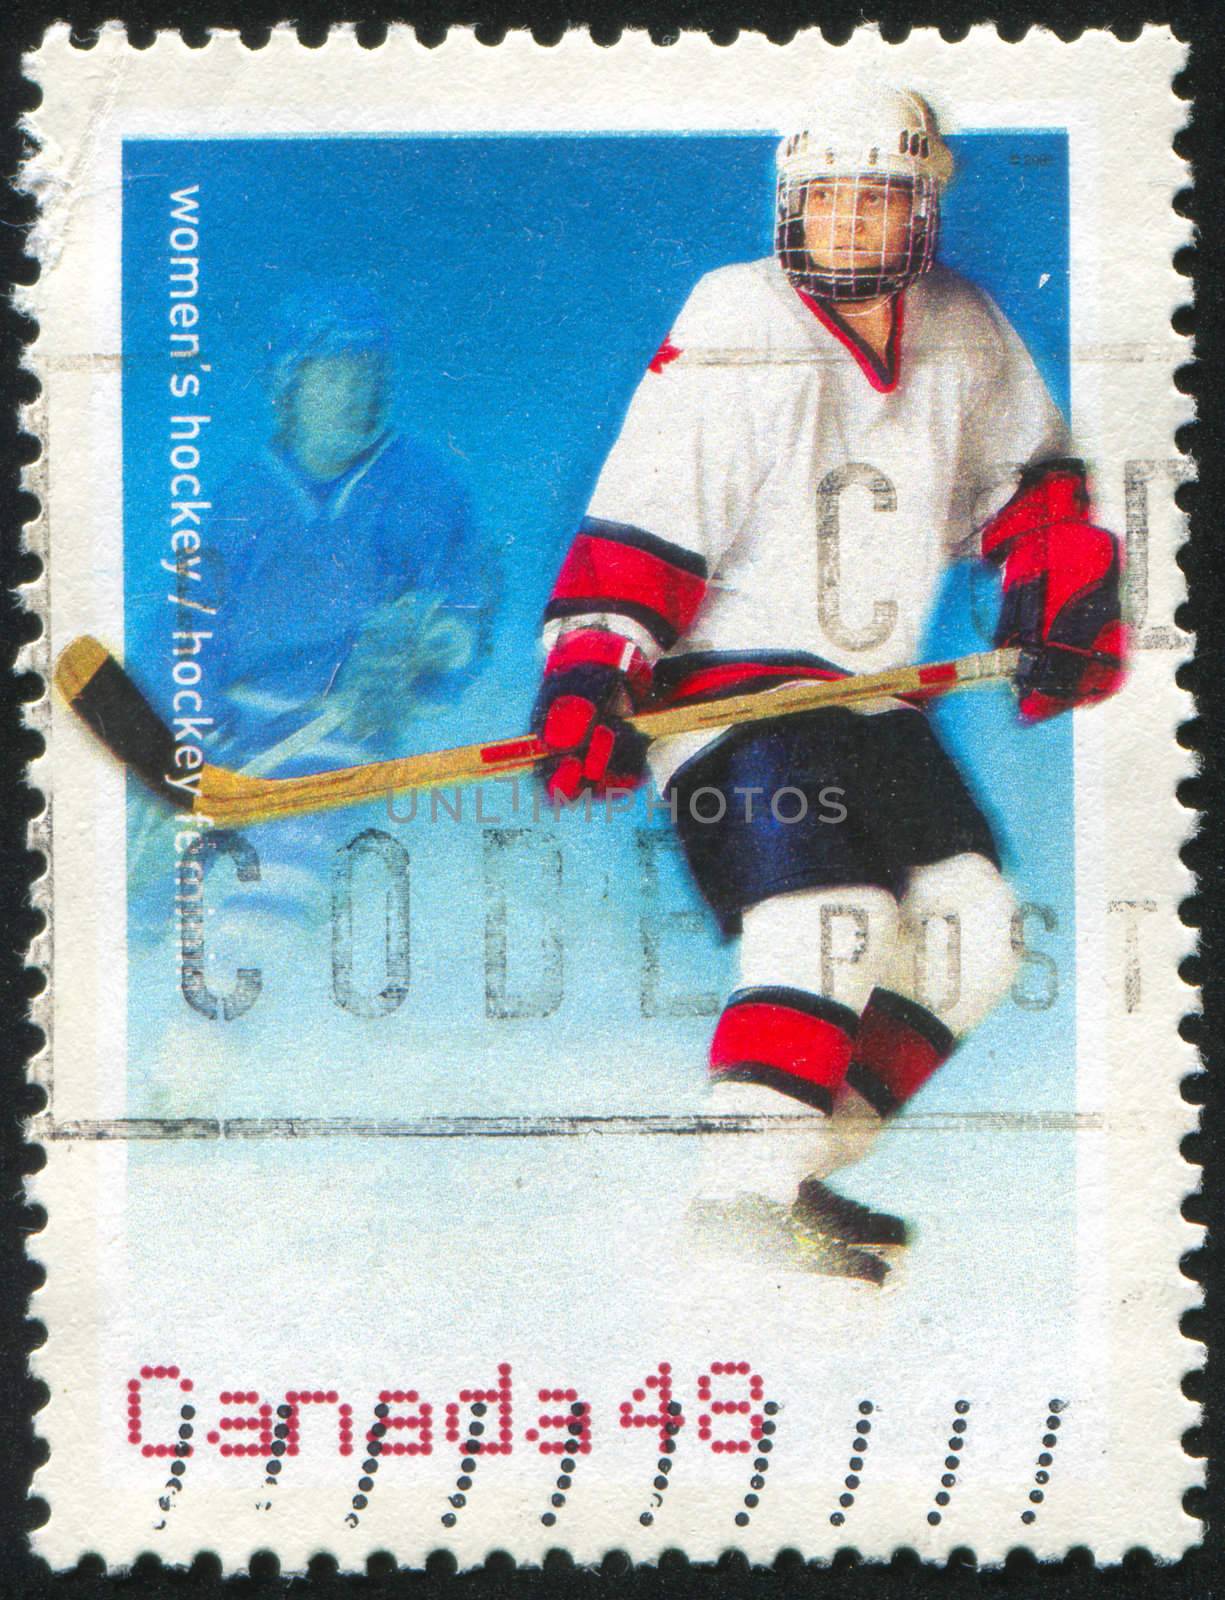 CANADA - CIRCA 2002: stamp printed by Canada, shows Hockey, circa 2002